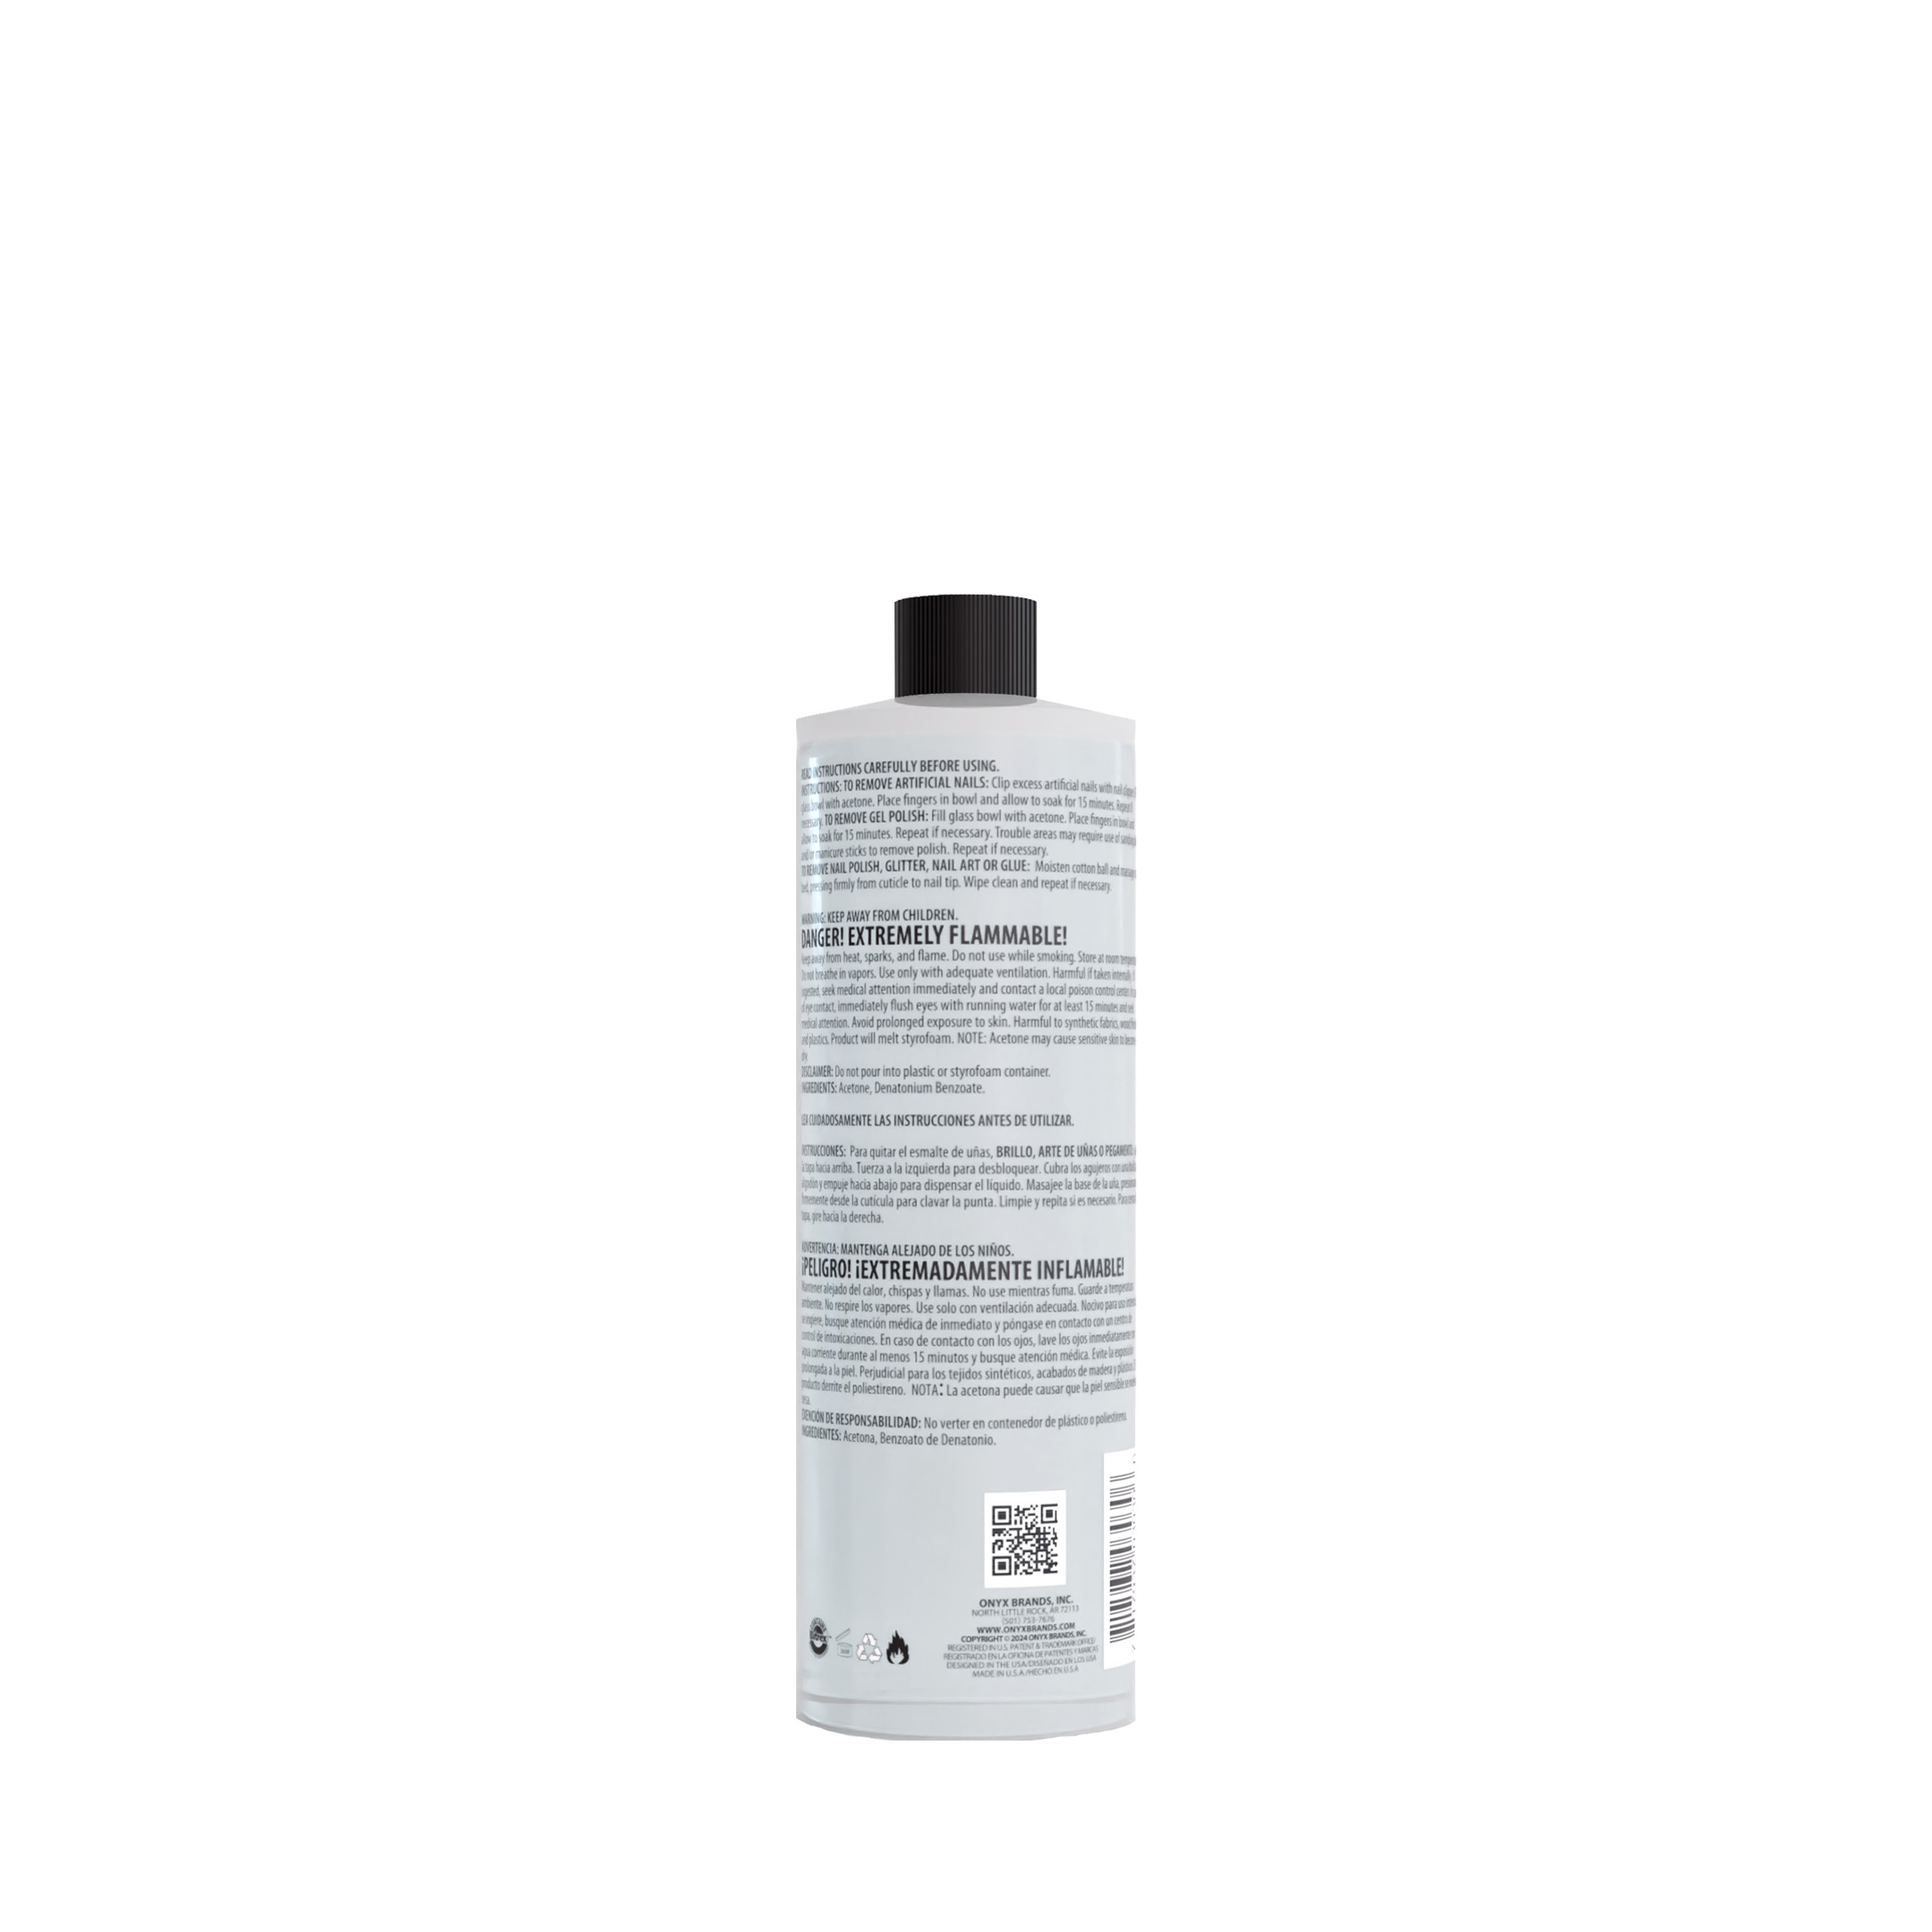 Onyx Professional 100% Pure Acetone Nail Polish Remover, 16 fl oz - image 5 of 6